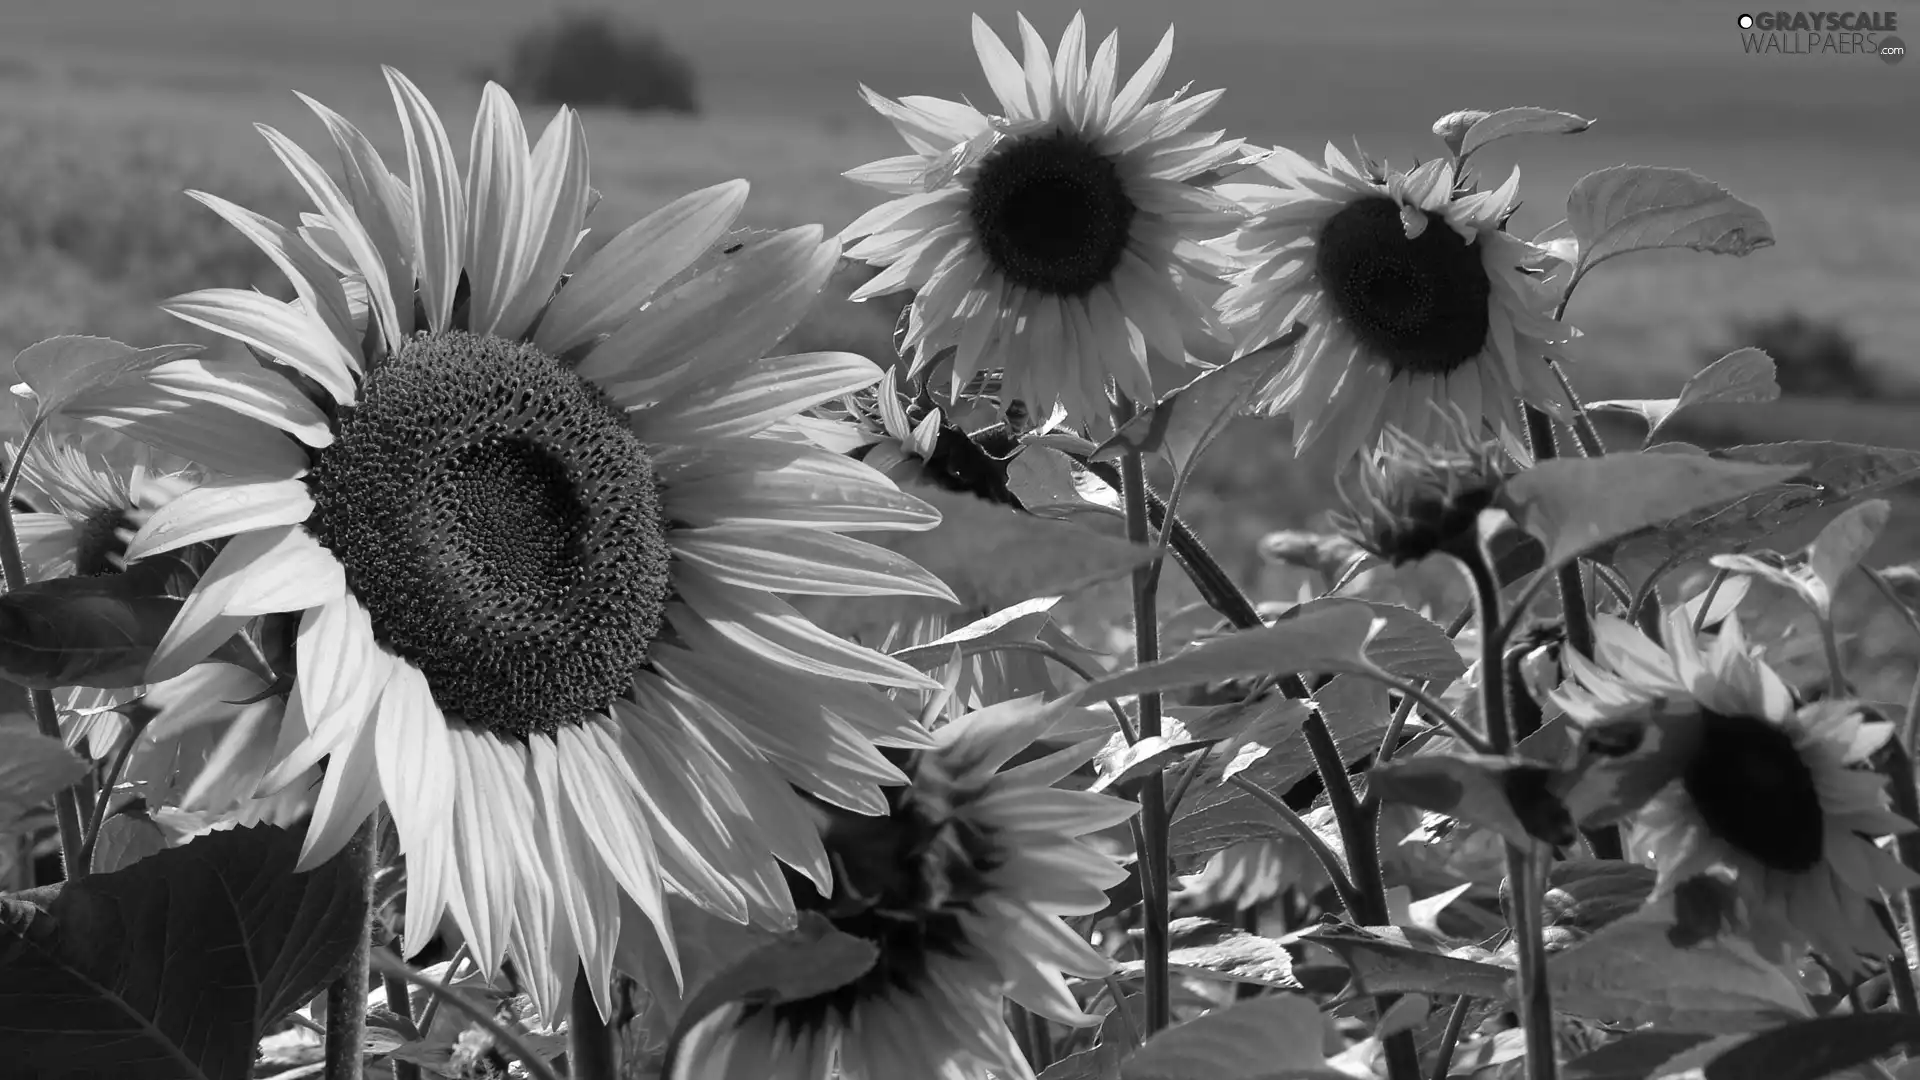 illuminated, Nice sunflowers